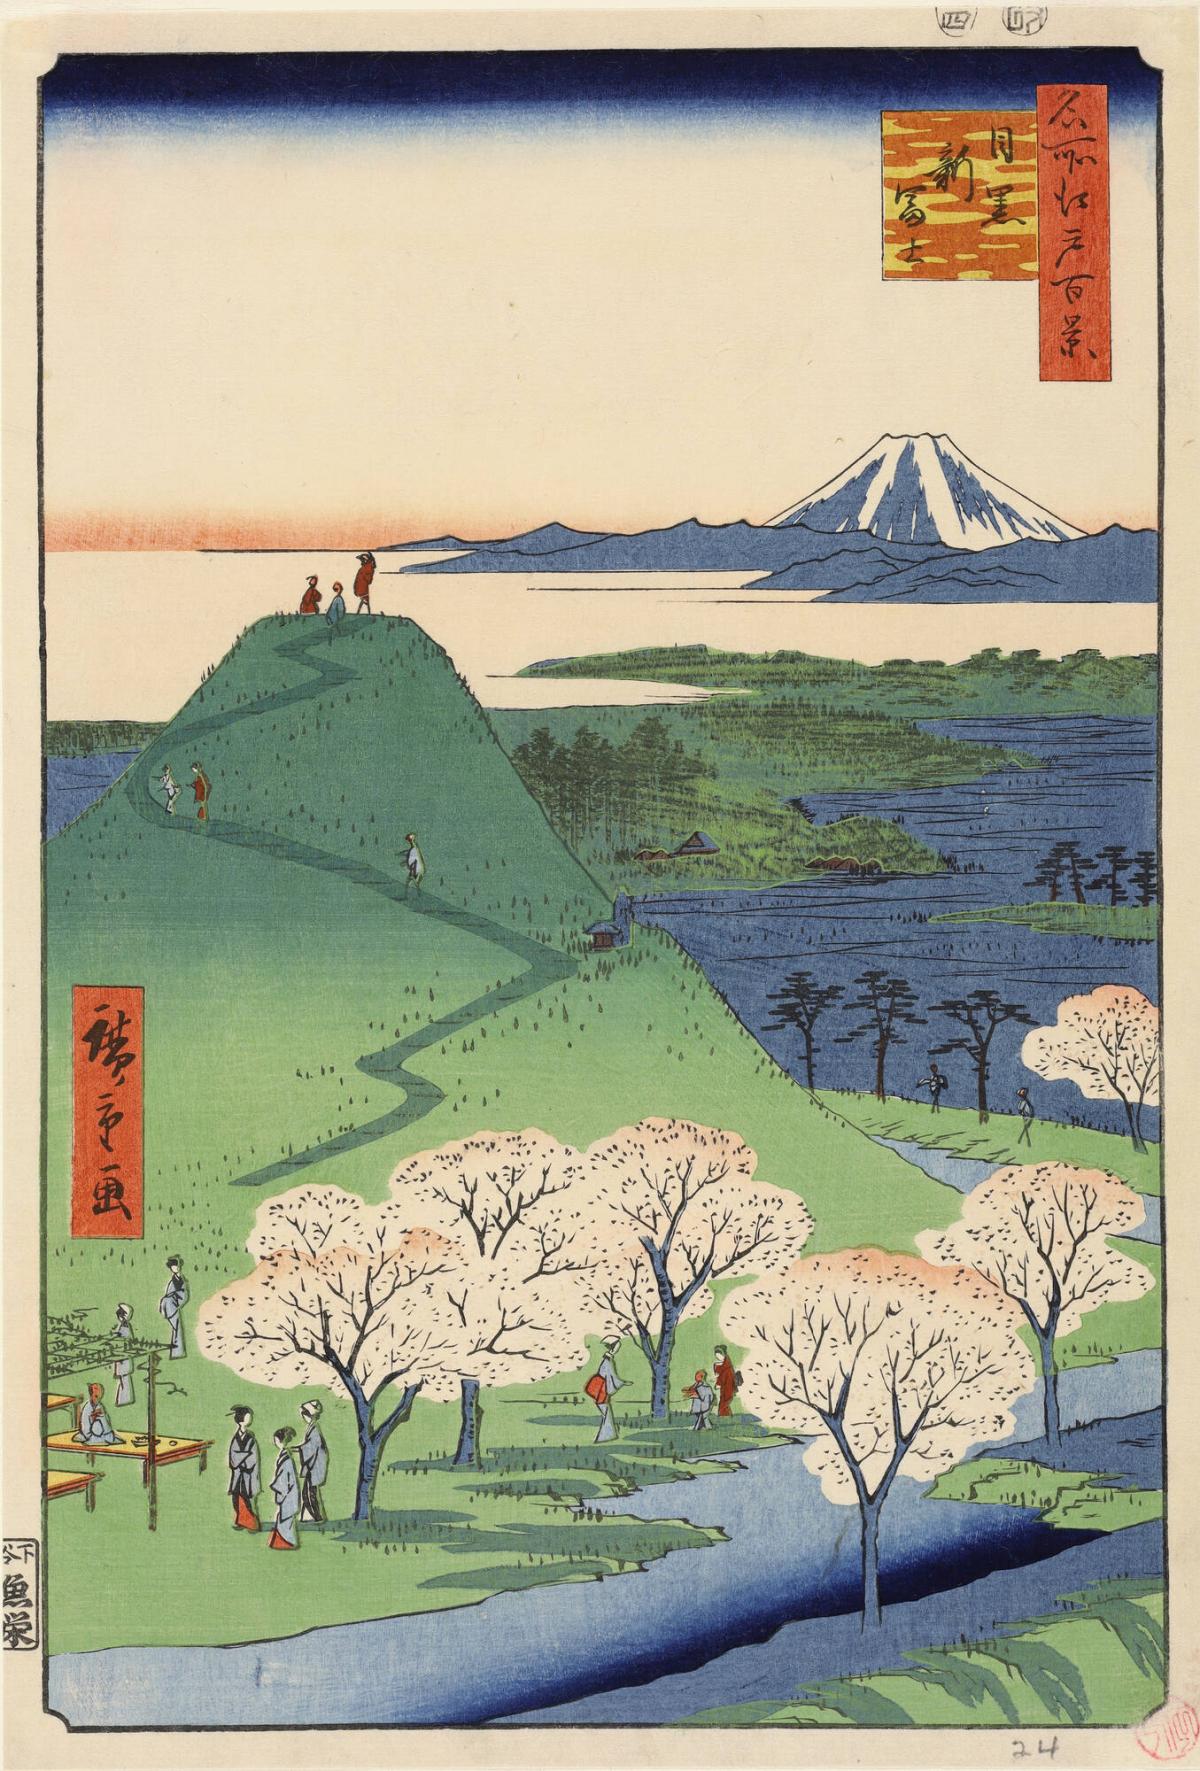 New Fuji at Meguro (Meguro Shin-Fuji), from the series One Hundred Famous Views of Edo (Meisho Edo hyakkei)